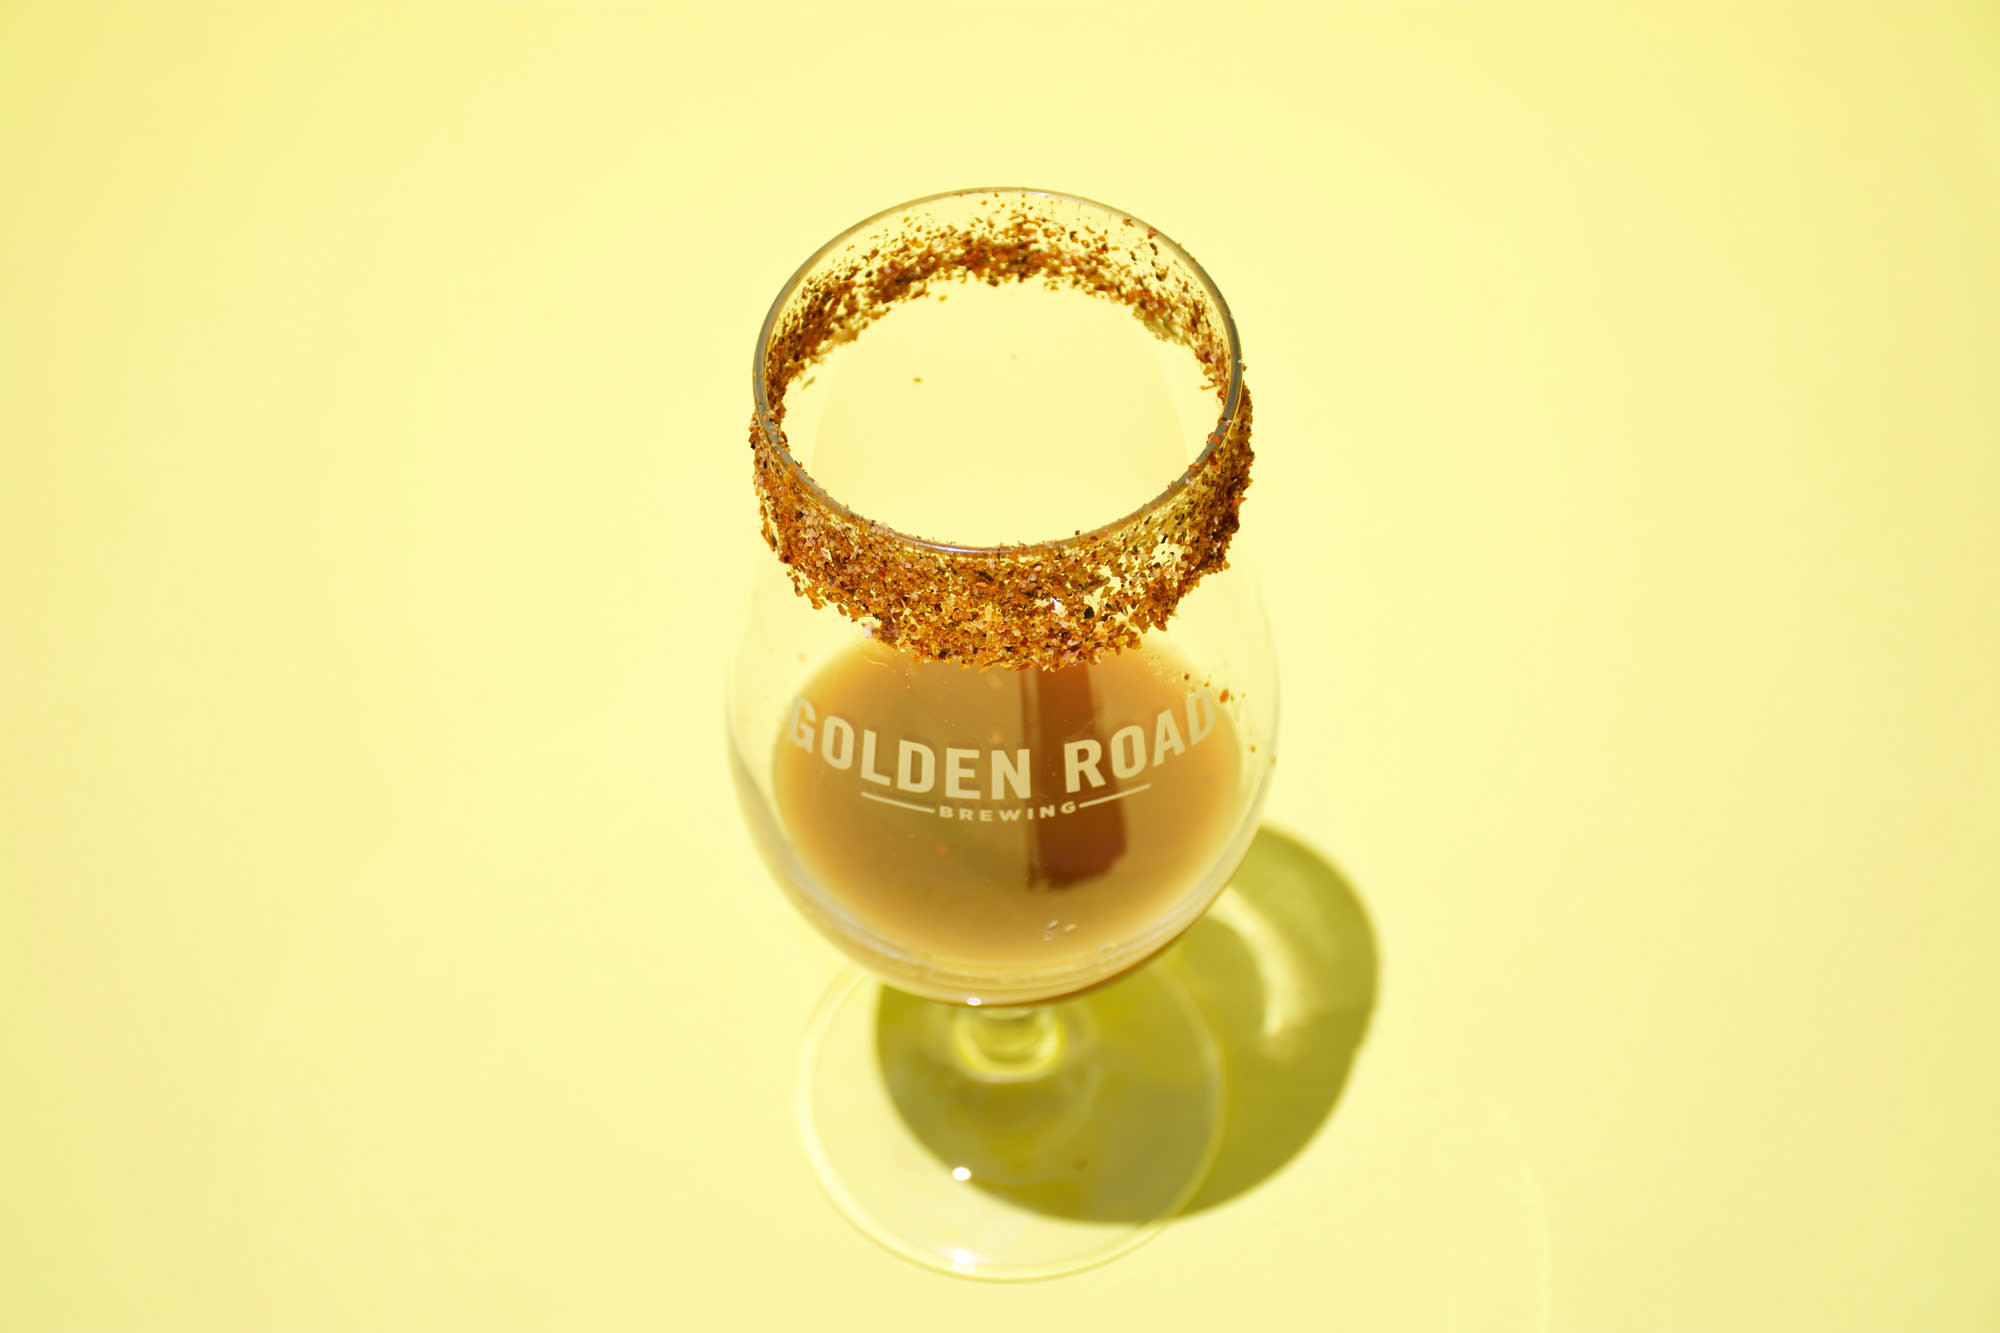 Golden Road's Mango Beer with Ilovemichelada mix